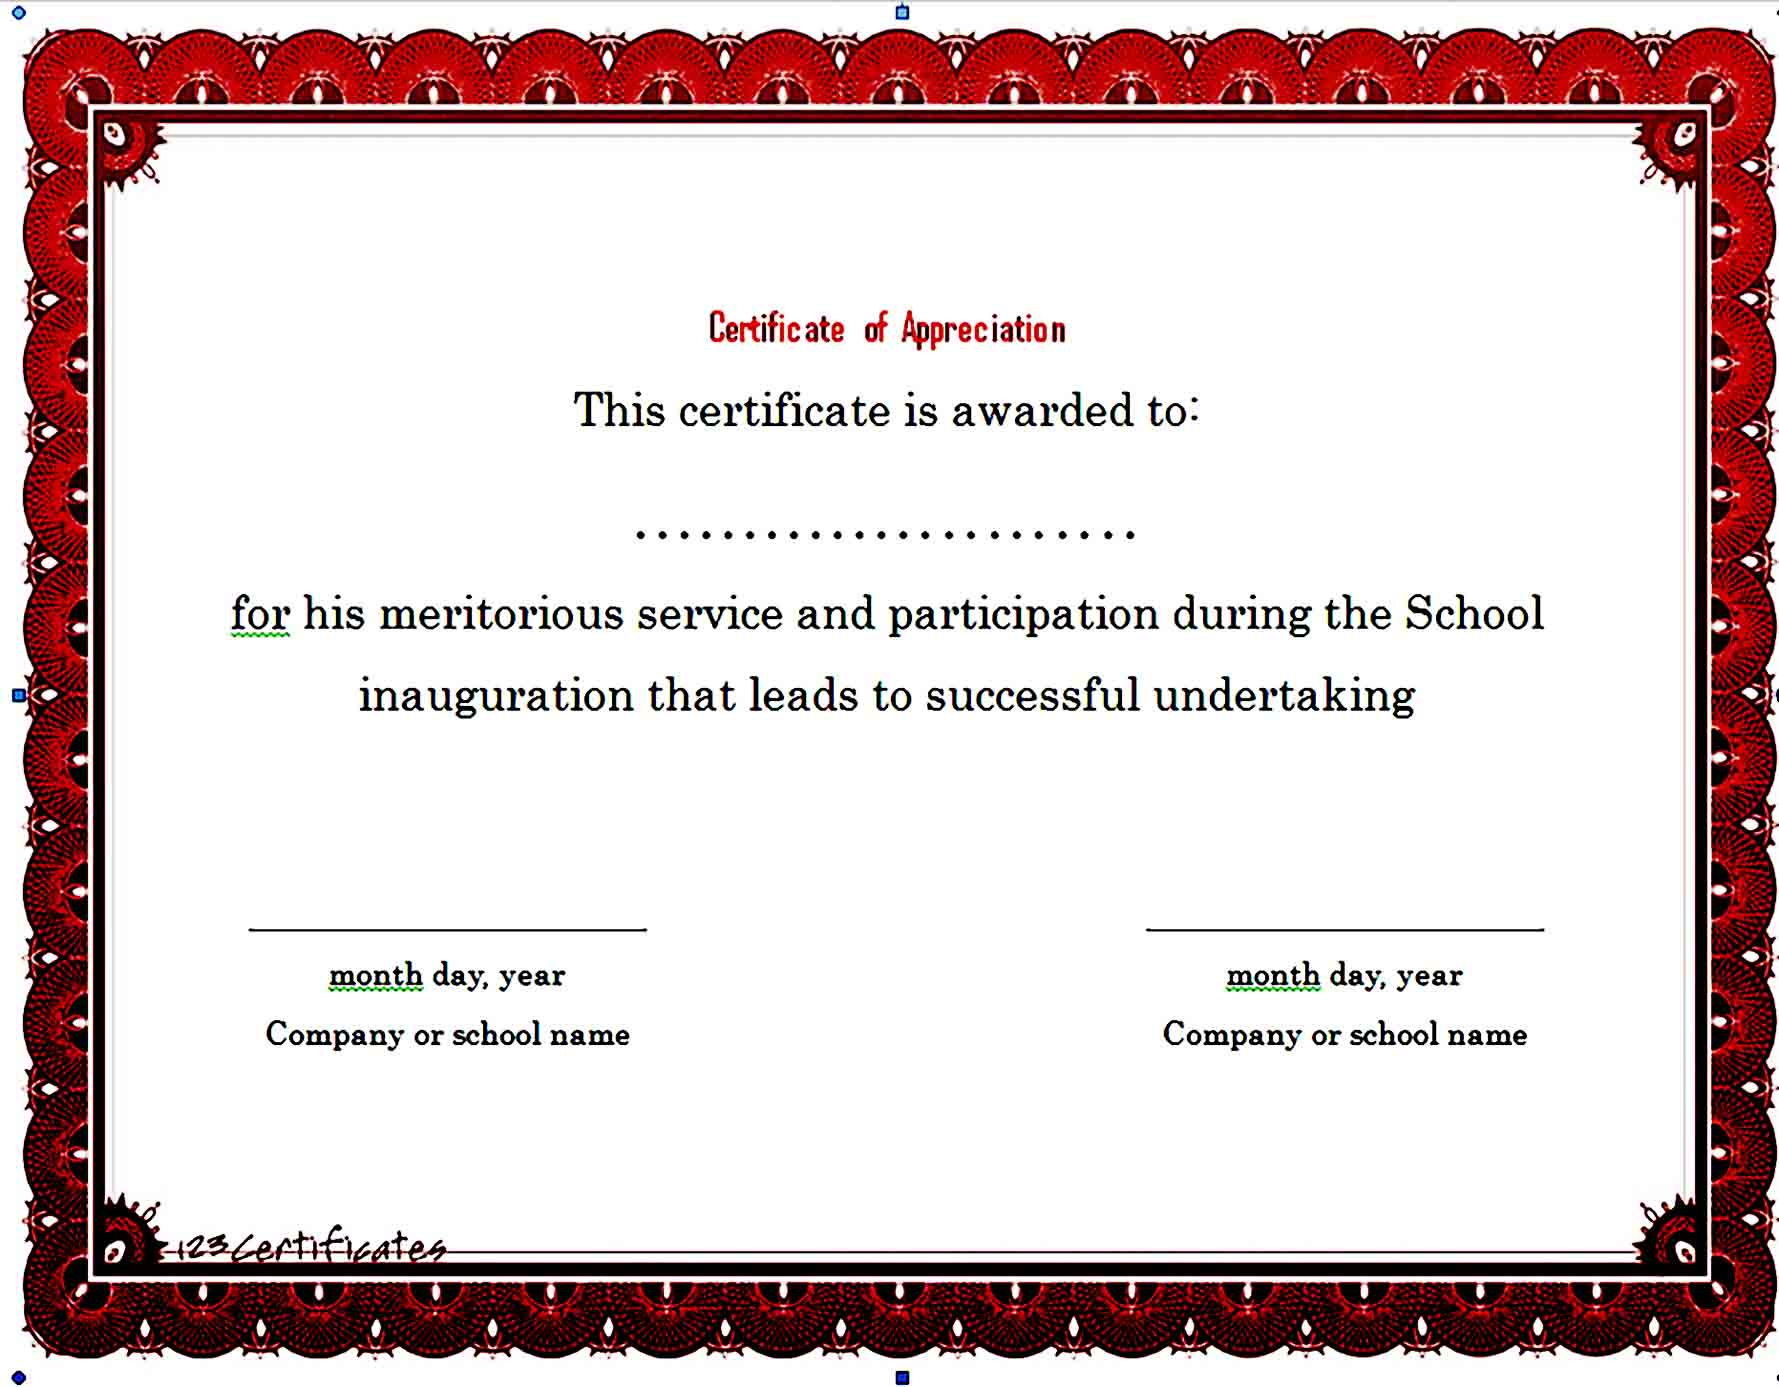 Certificate of Appreciation 01